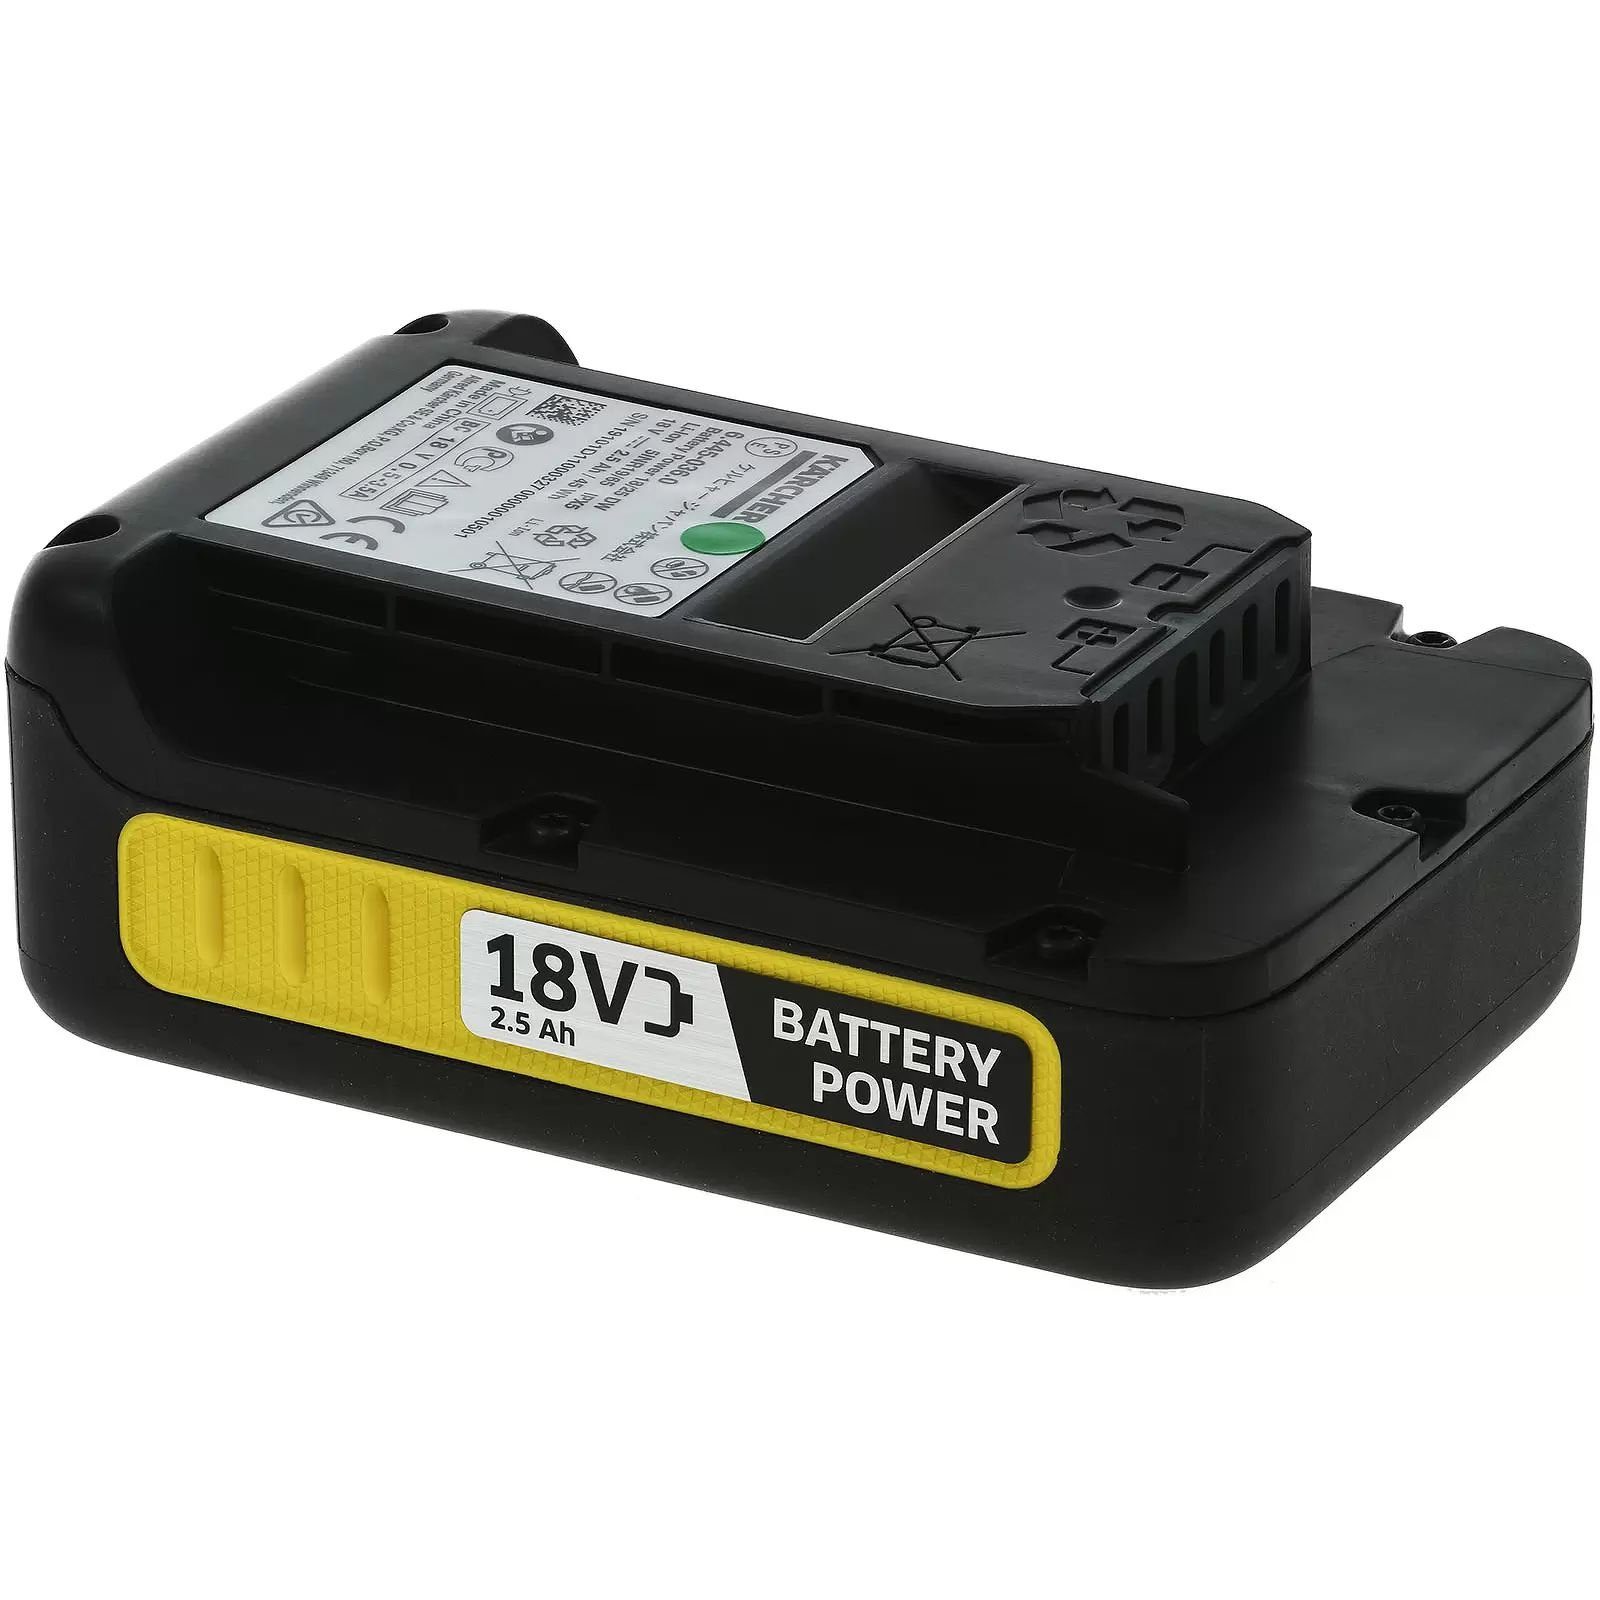 Akku 18V Power Battery alle Geräte Kärcher der Kärcher 18/25 Batt für KÄRCHER Akku